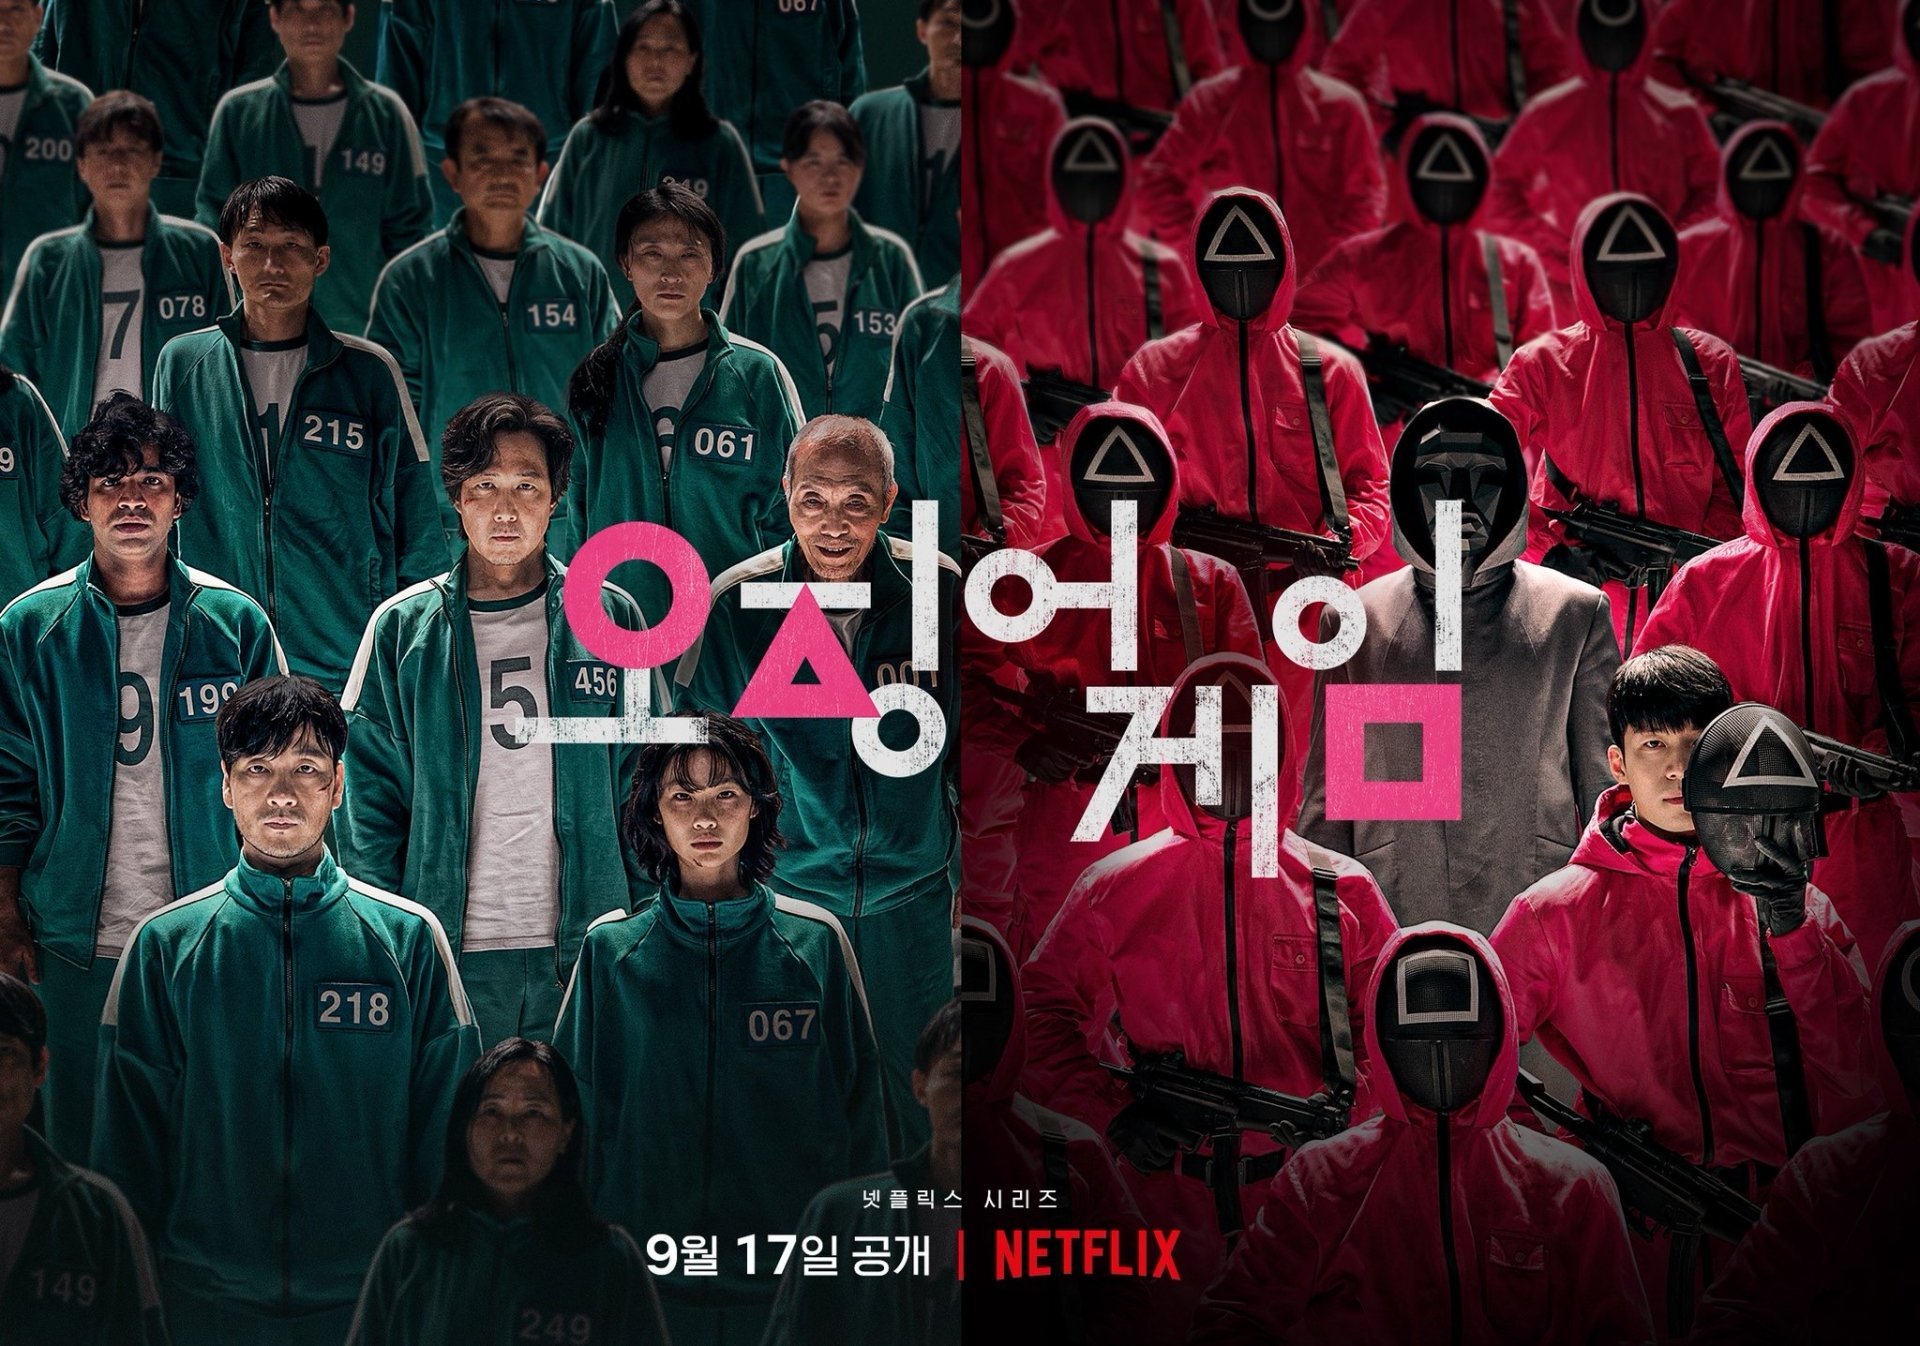 People 1920x1346 Squid Game Death Game Netflix TV series Korean